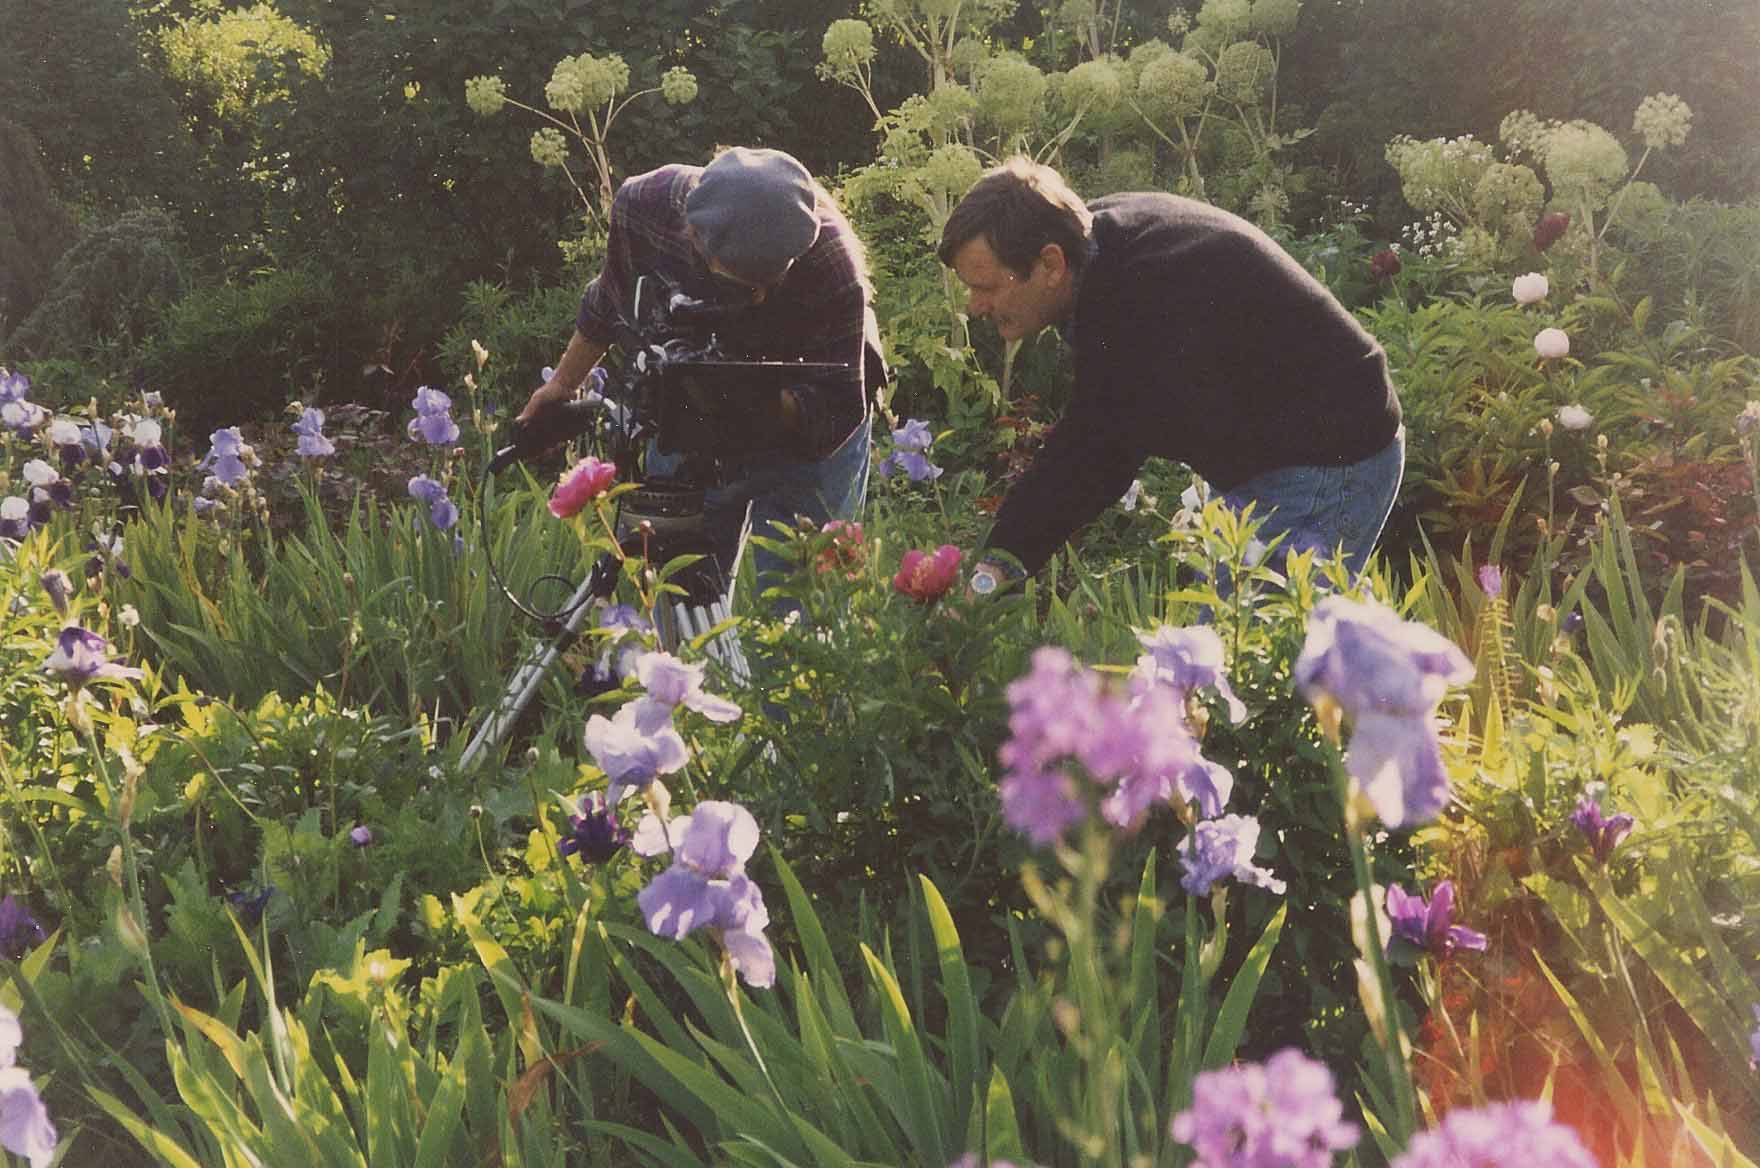 Filming in Monet's garden with Gary Eckert for 